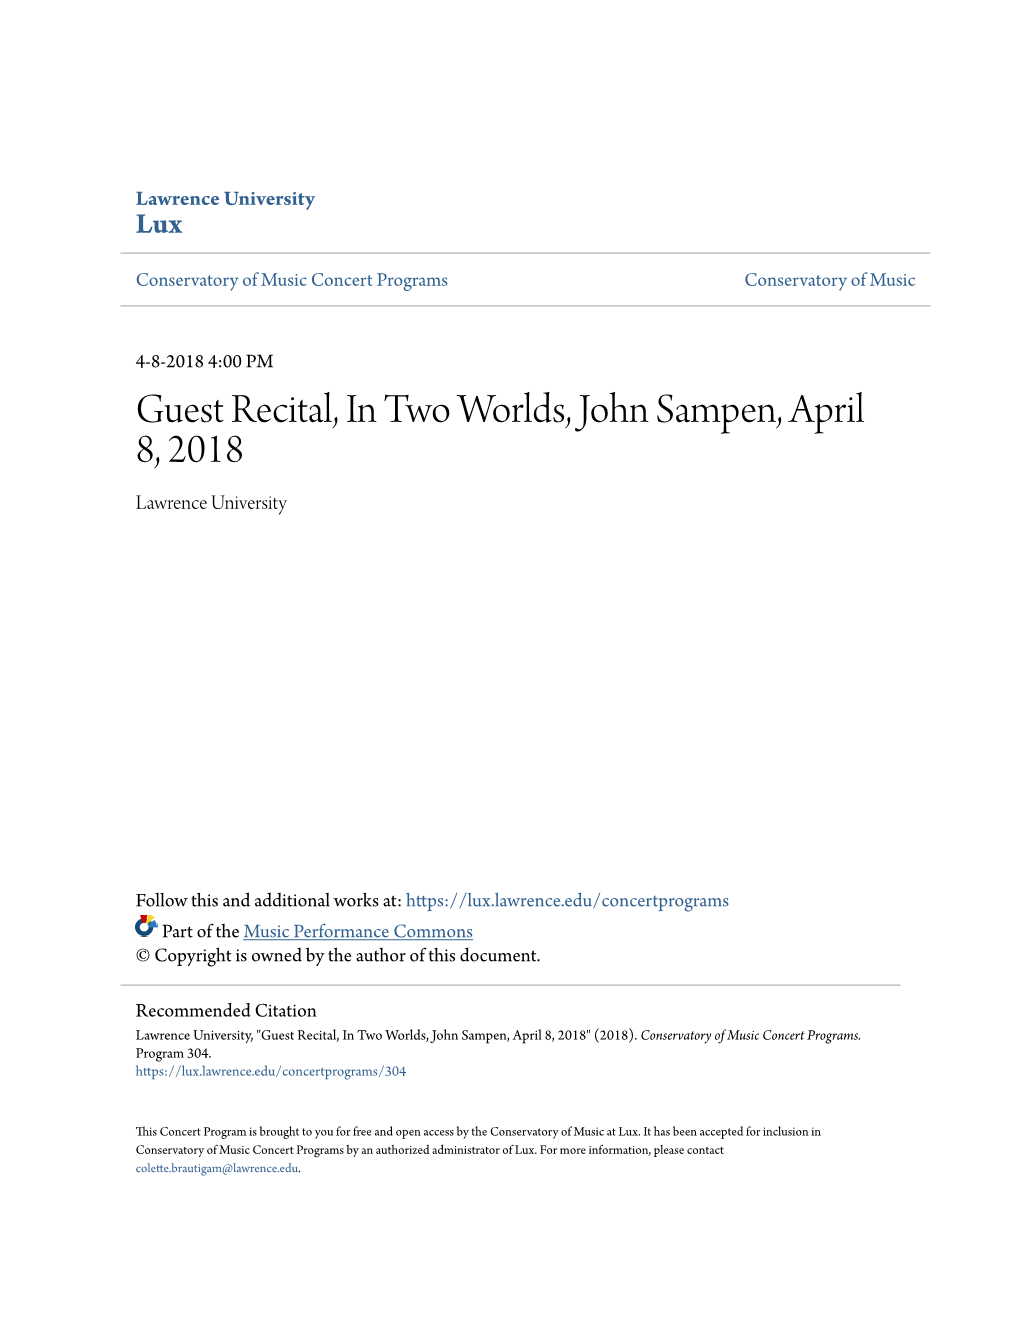 Guest Recital, in Two Worlds, John Sampen, April 8, 2018 Lawrence University